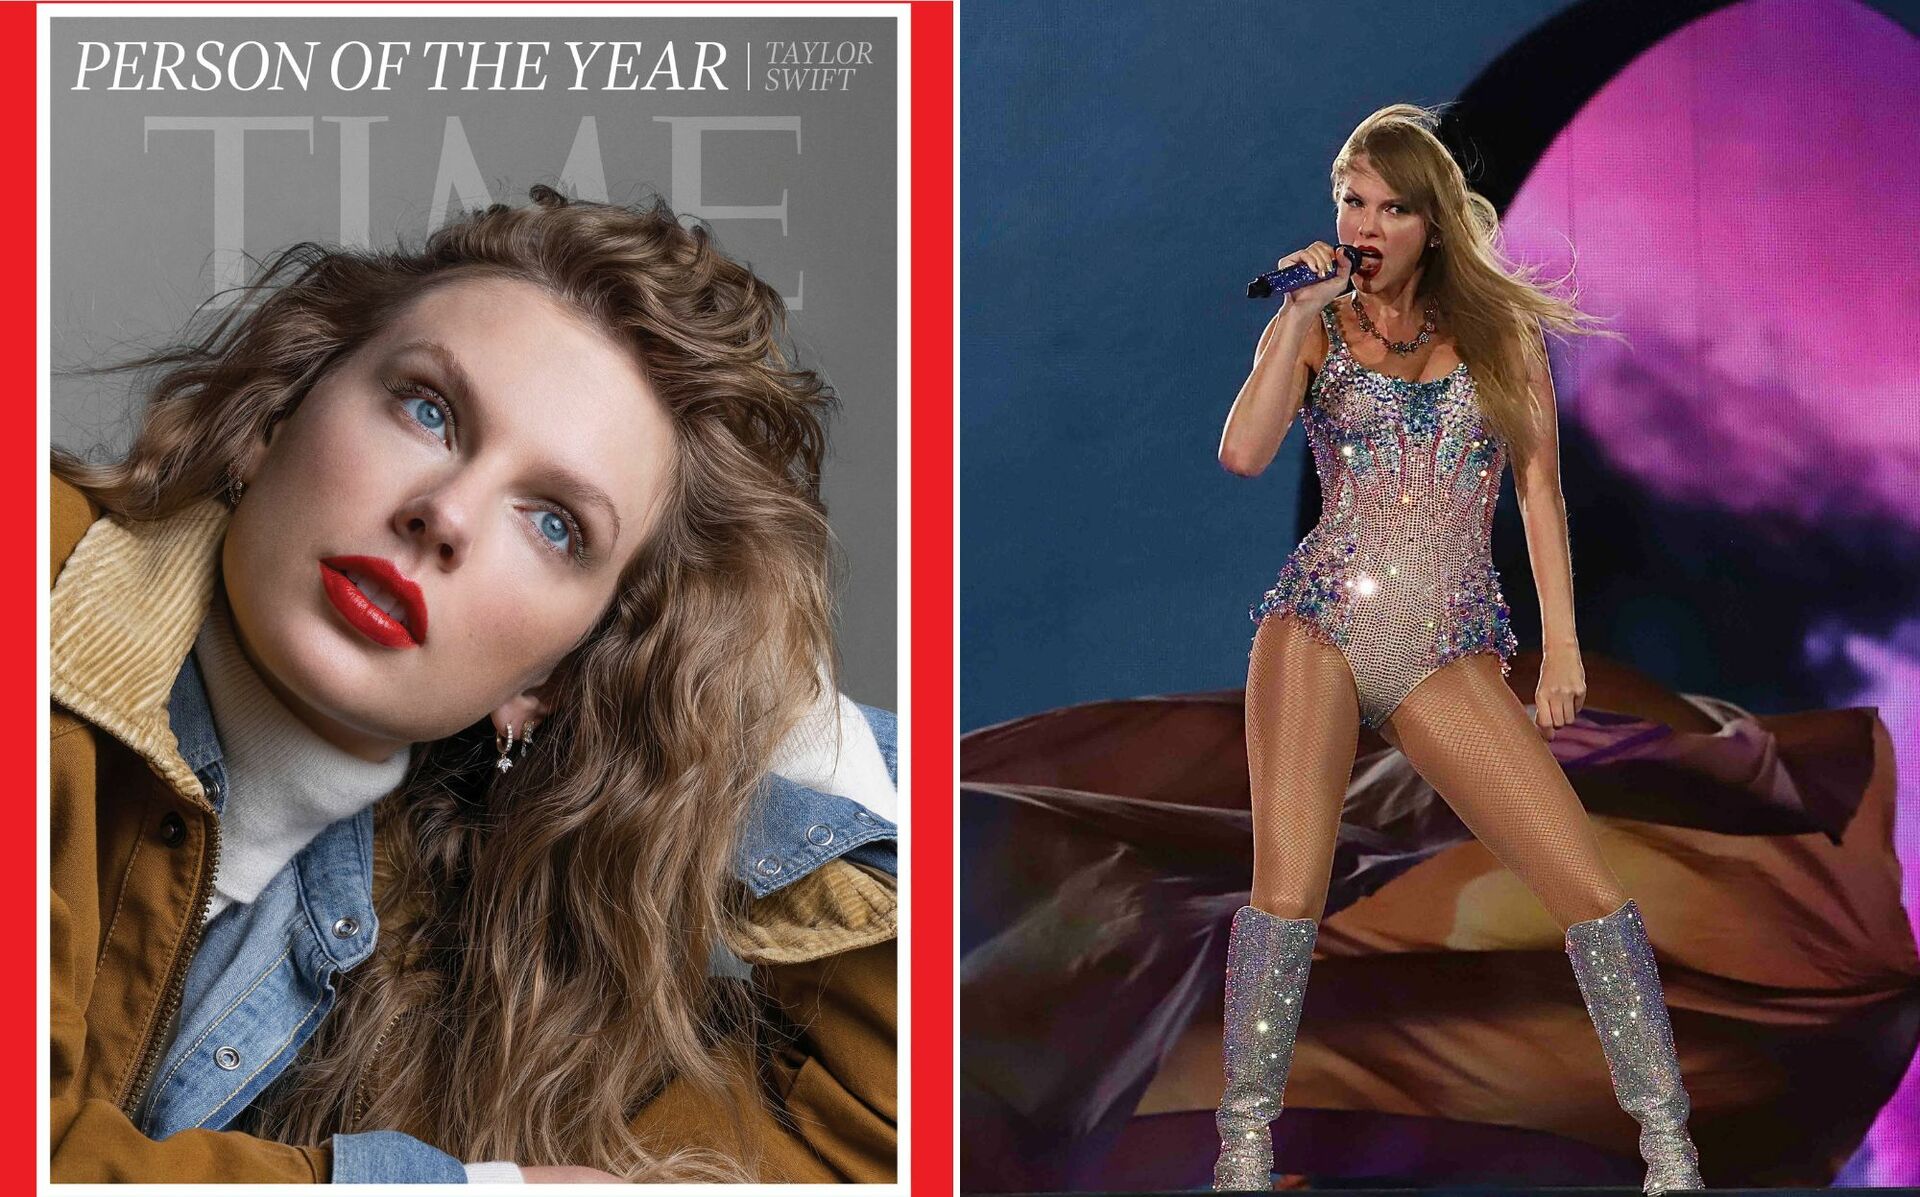 Ni Xi Jinping ni Barbie, Taylor Swift es la persona del año para la revista Time